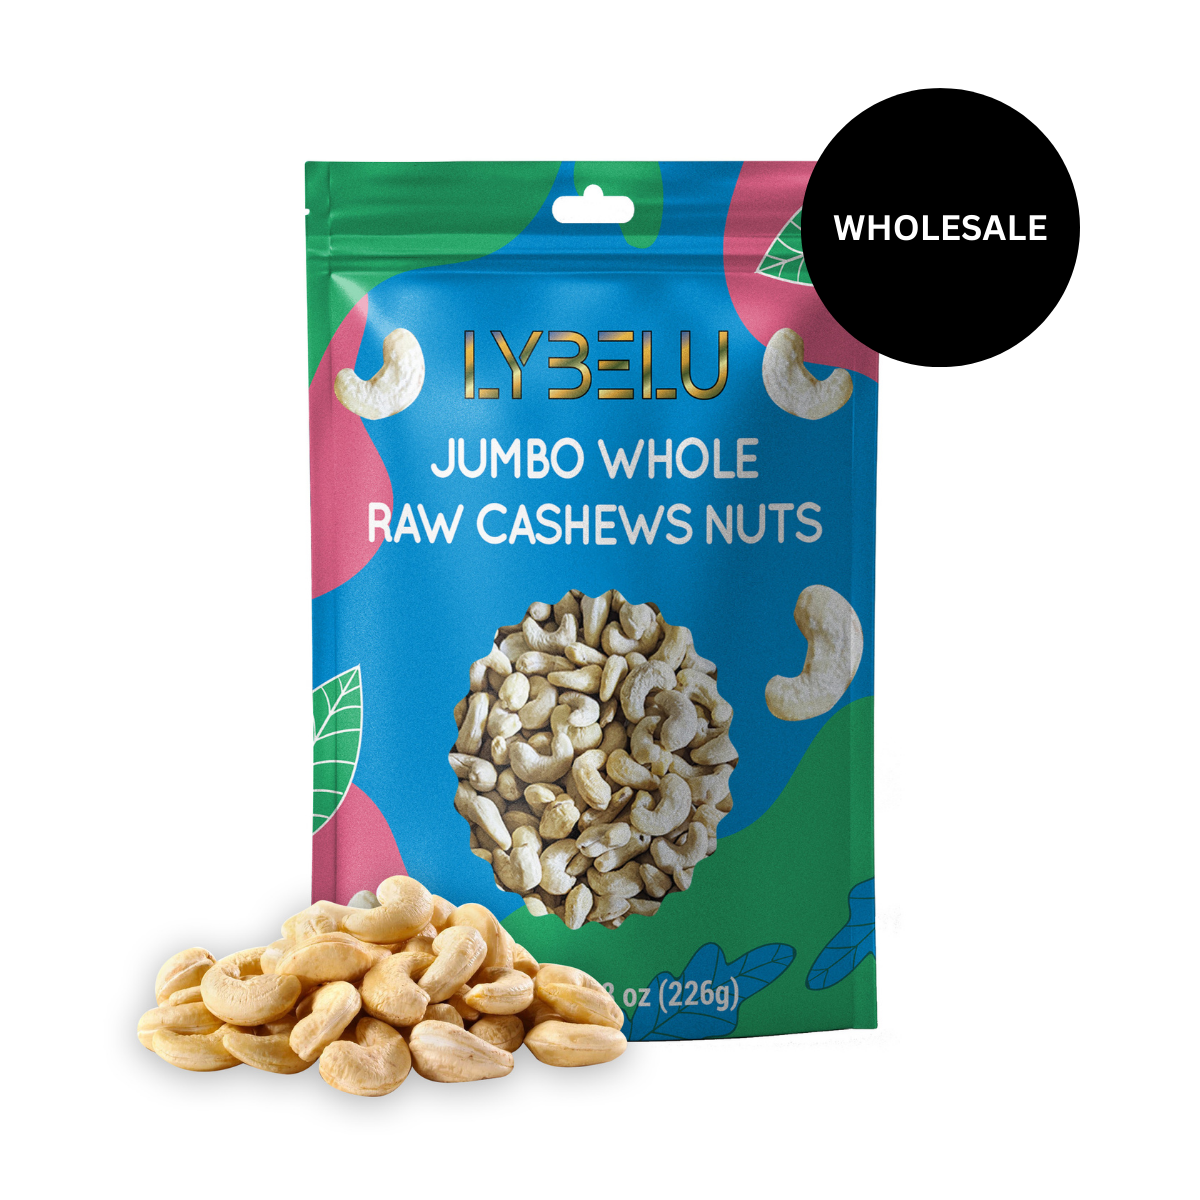 Jumbo Whole Raw Cashews Nuts – 8oz